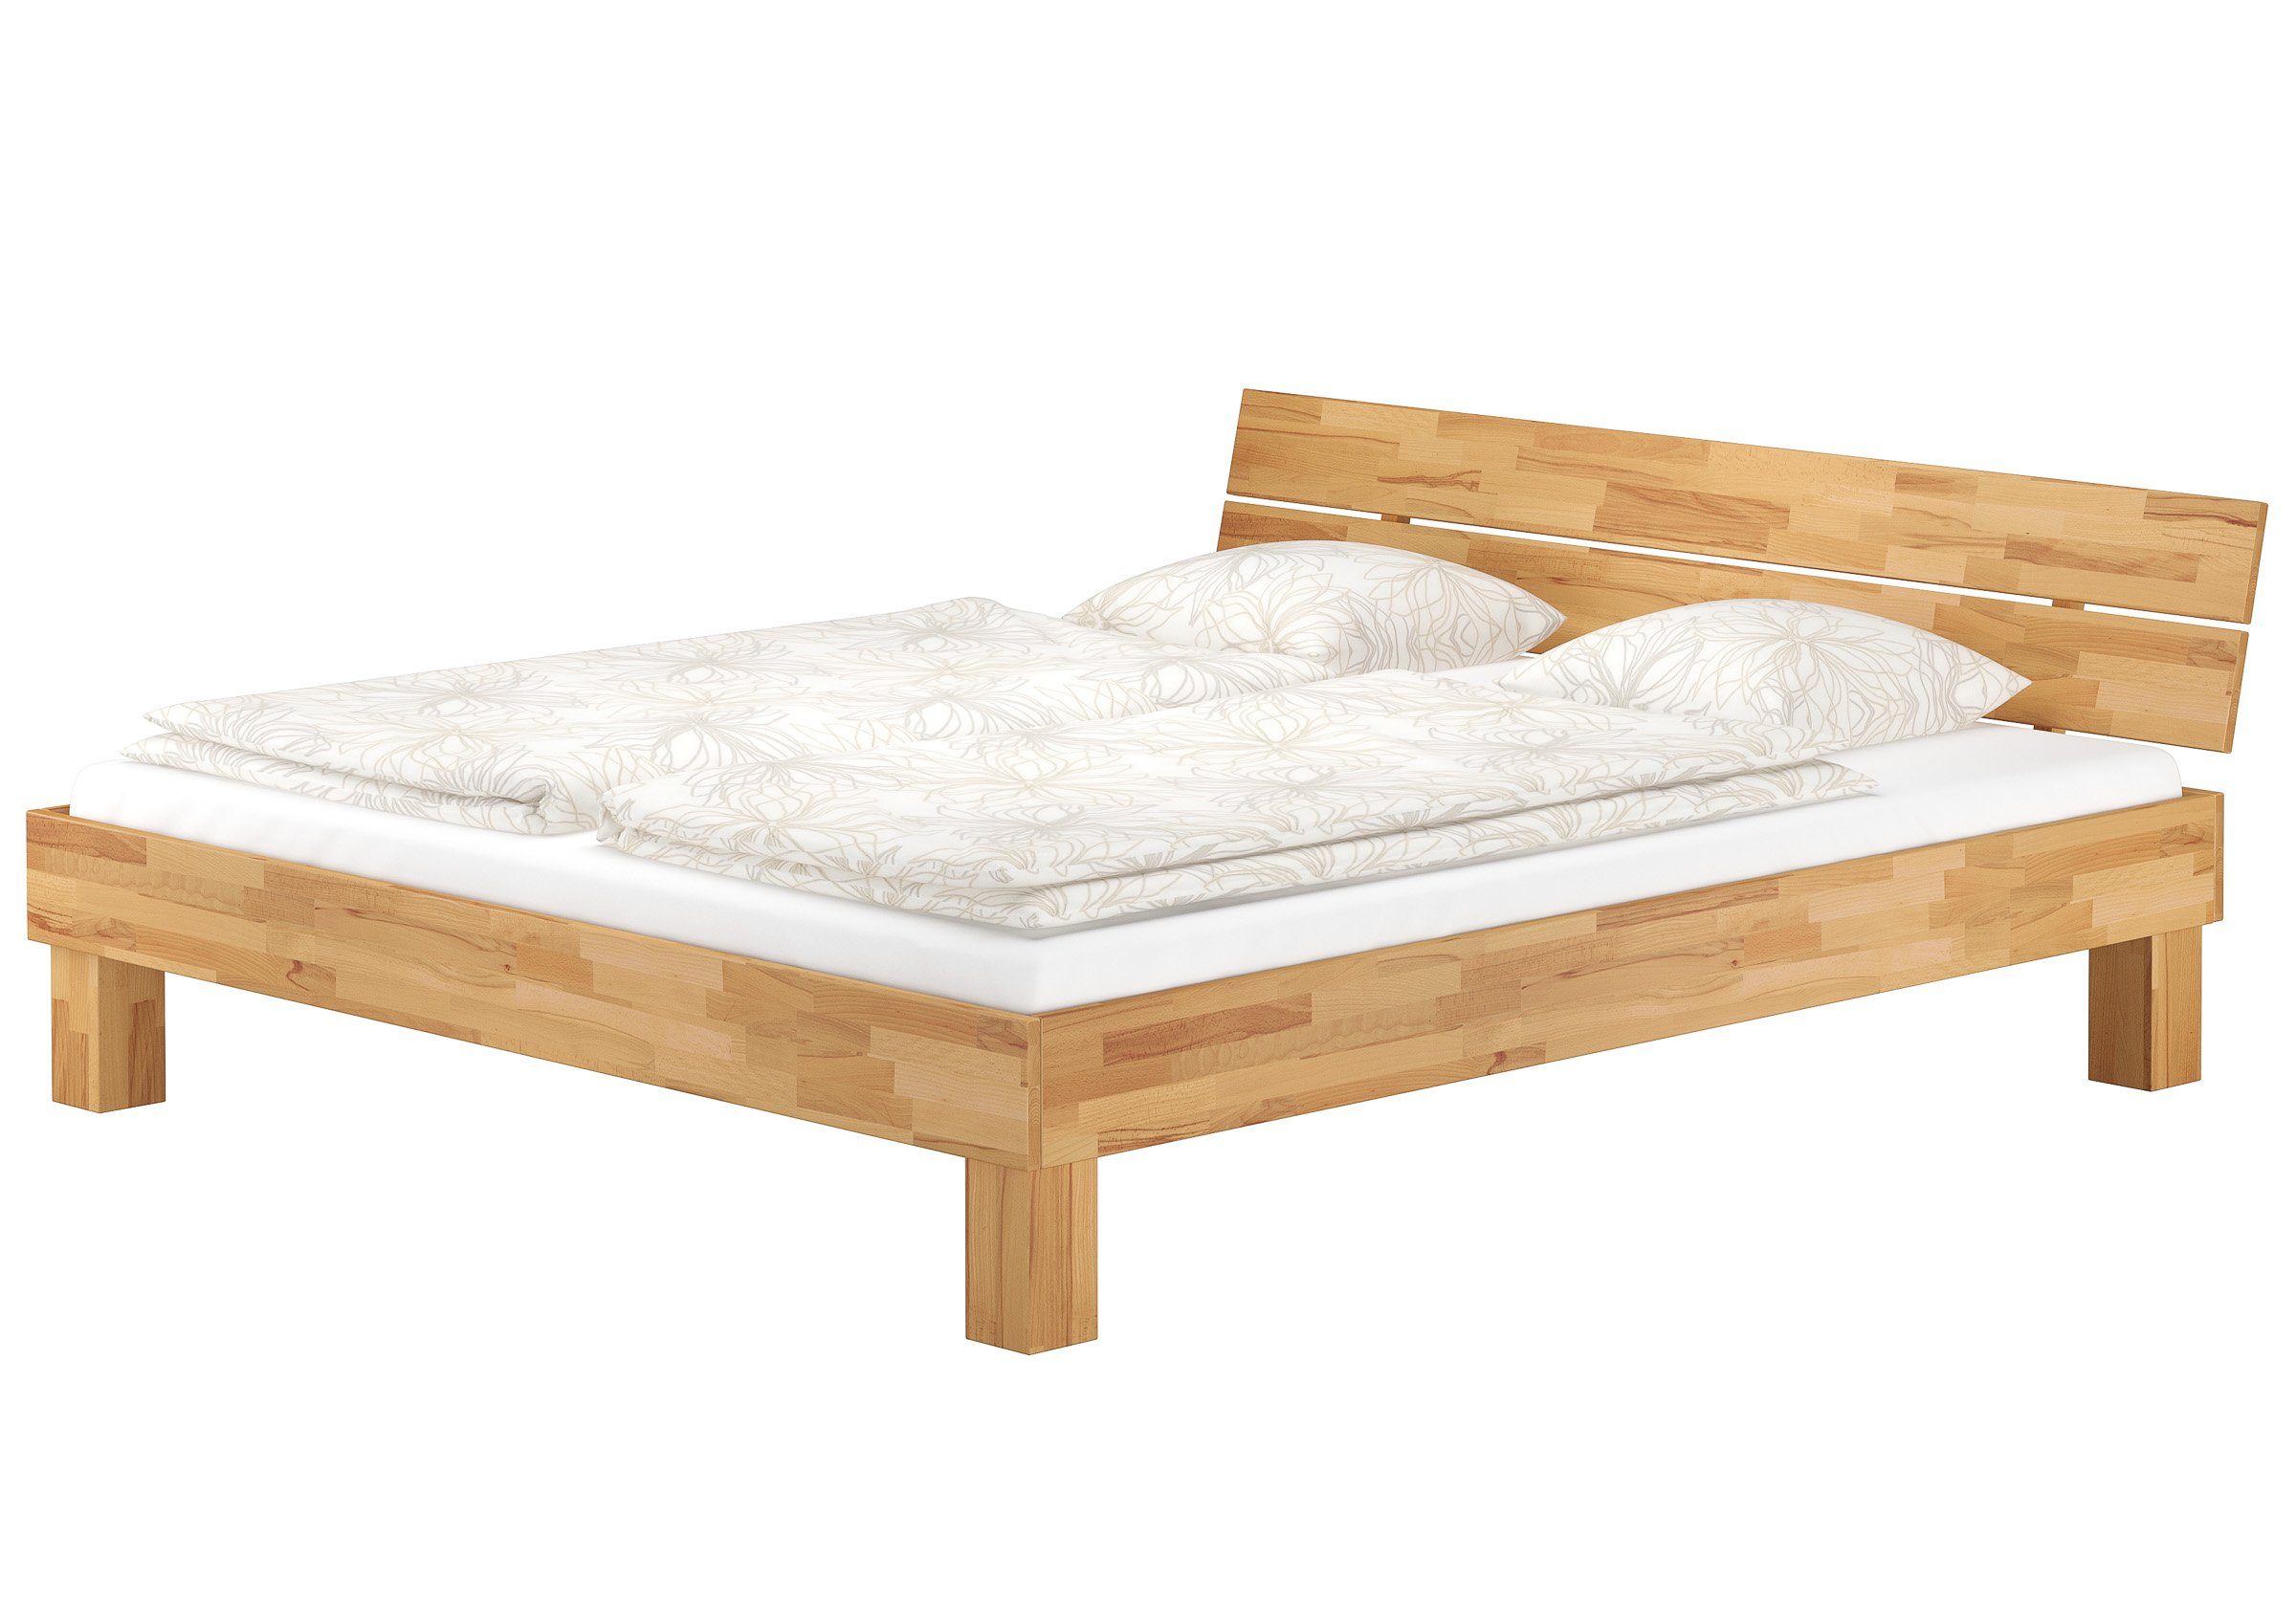 ERST-HOLZ Bett Doppelbett Buche Buchefarblos mit 160x200 Rollrost, lackiert natur